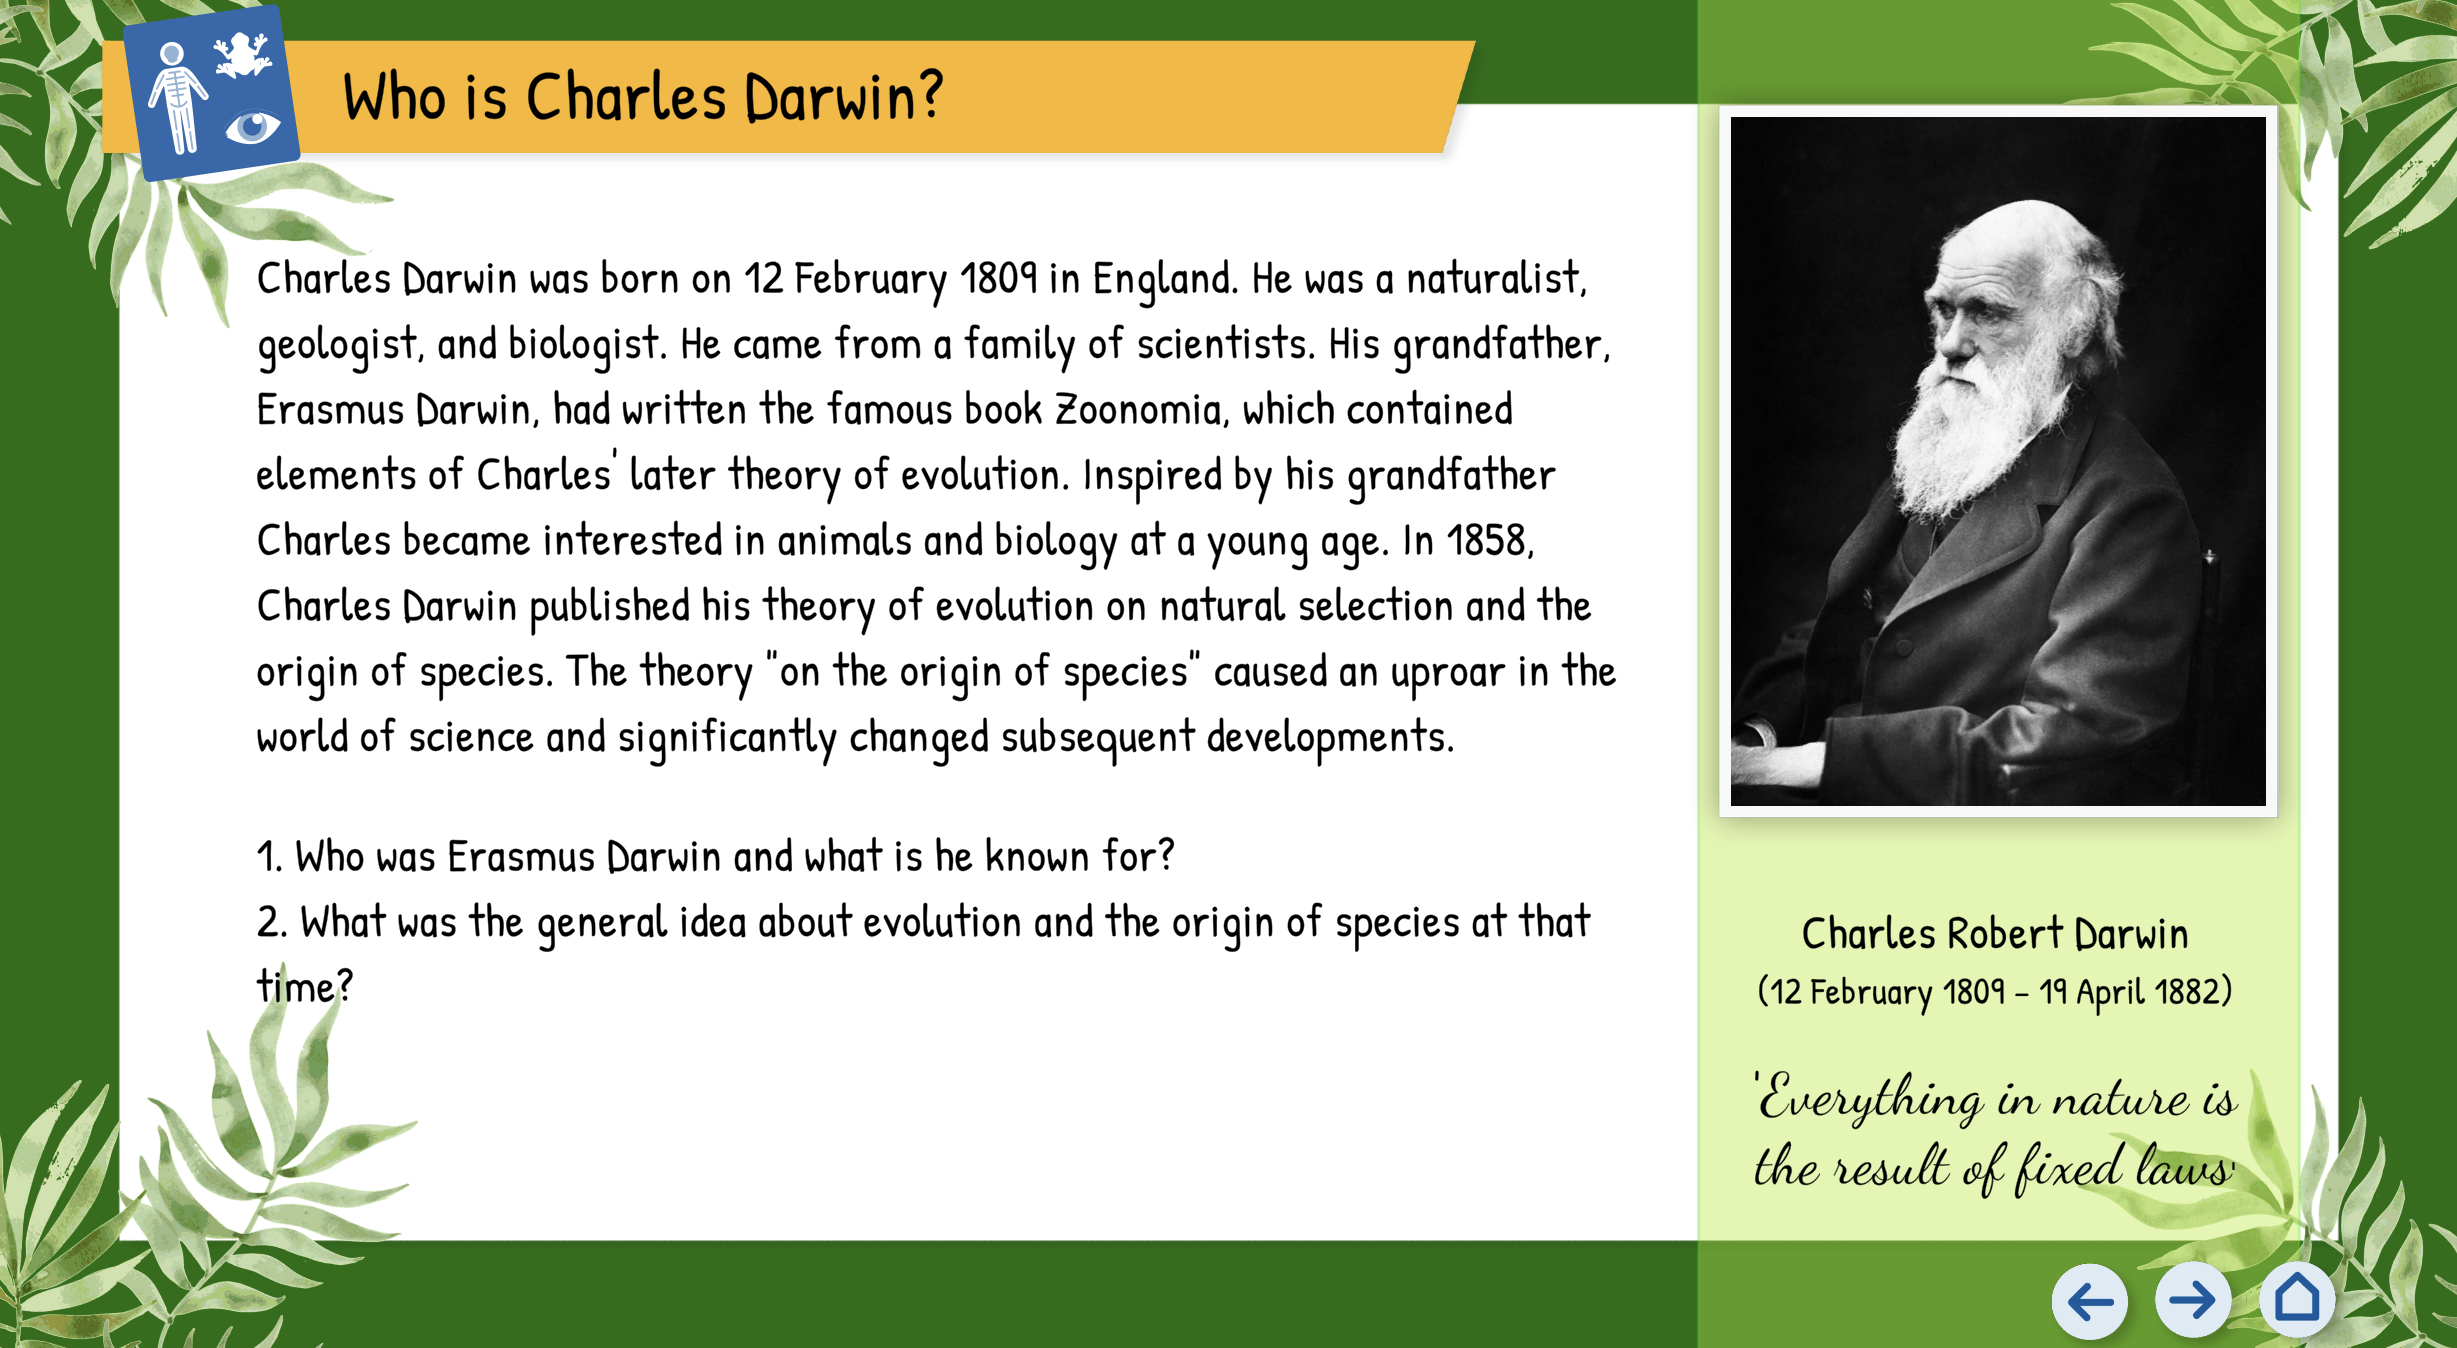 Charles Darwin - Theory of Evolution